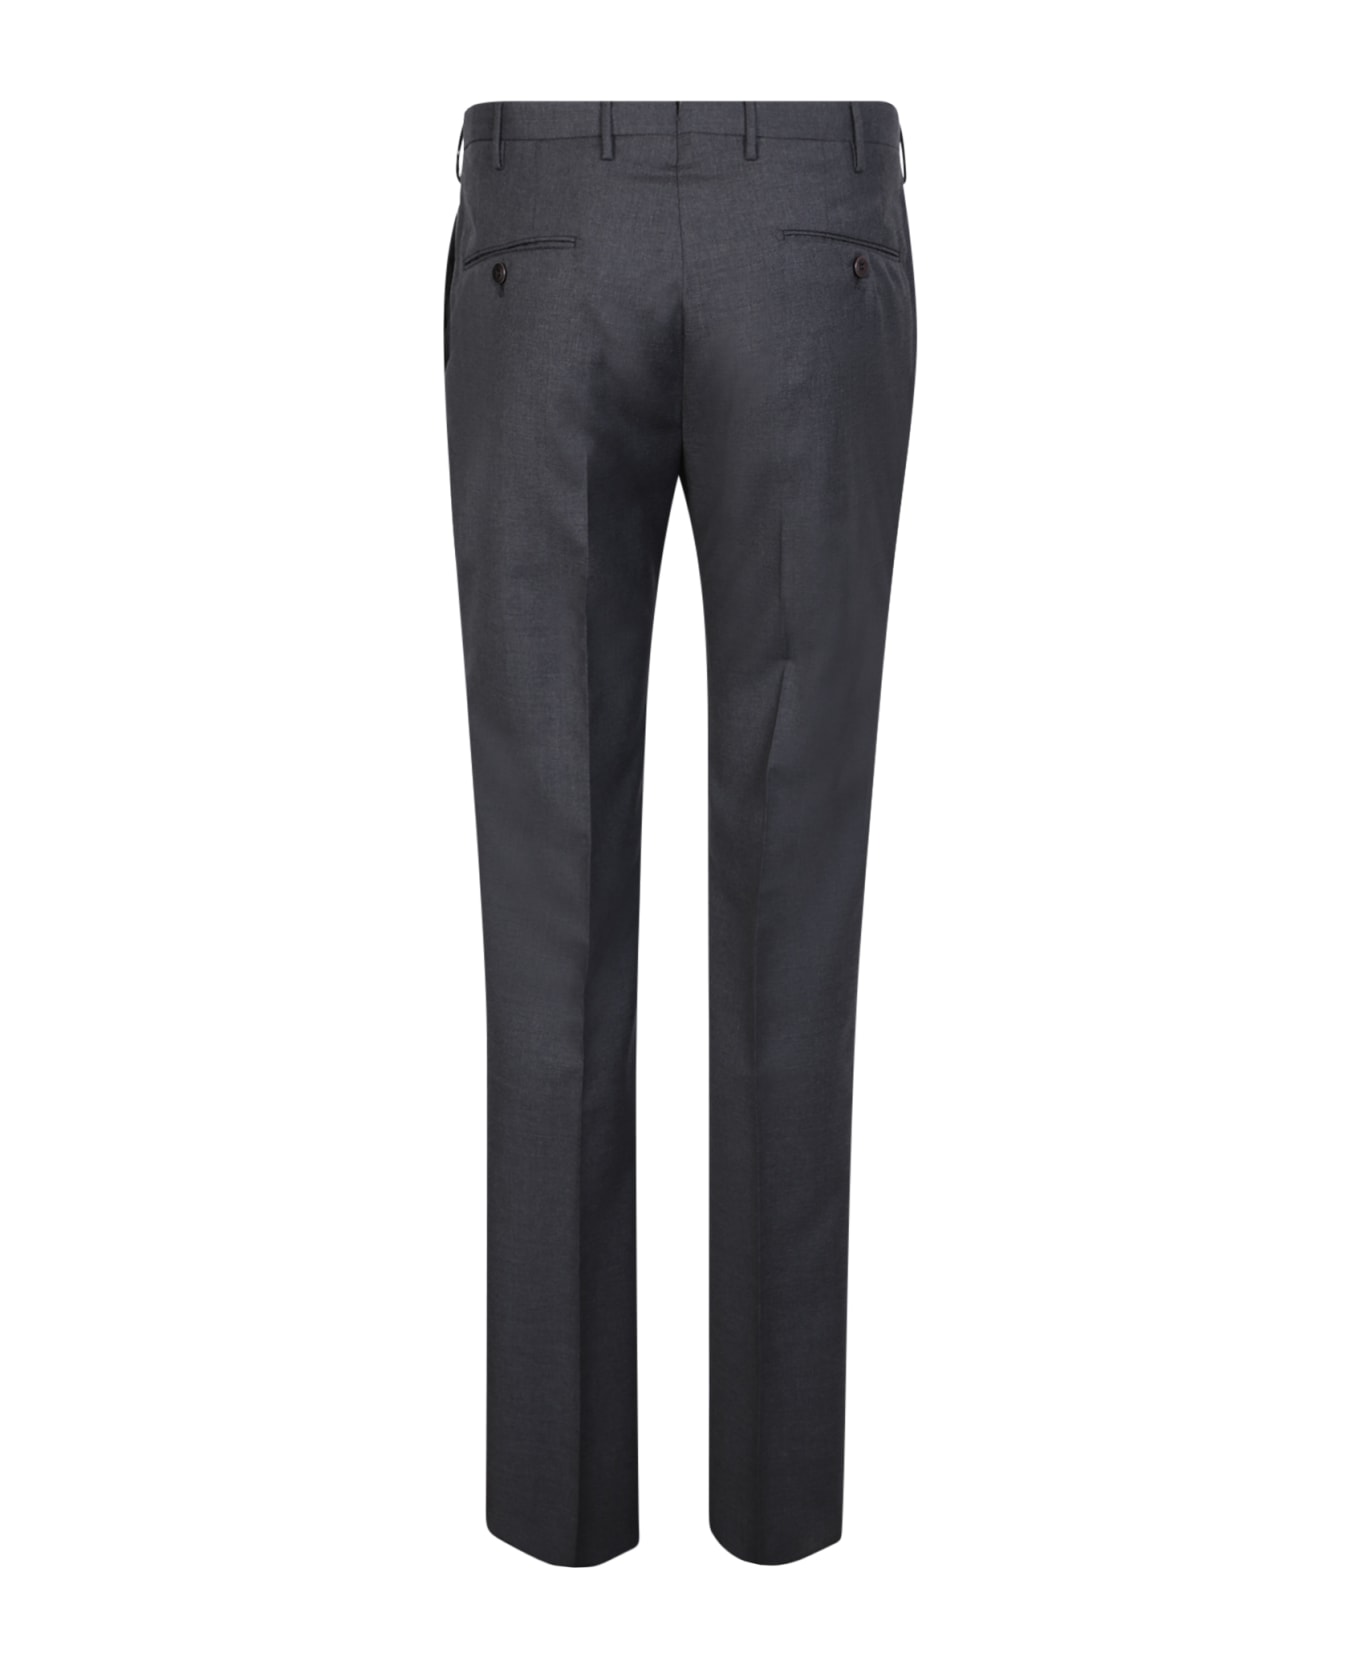 Incotex Grey Slim Fit Trousers - Grey